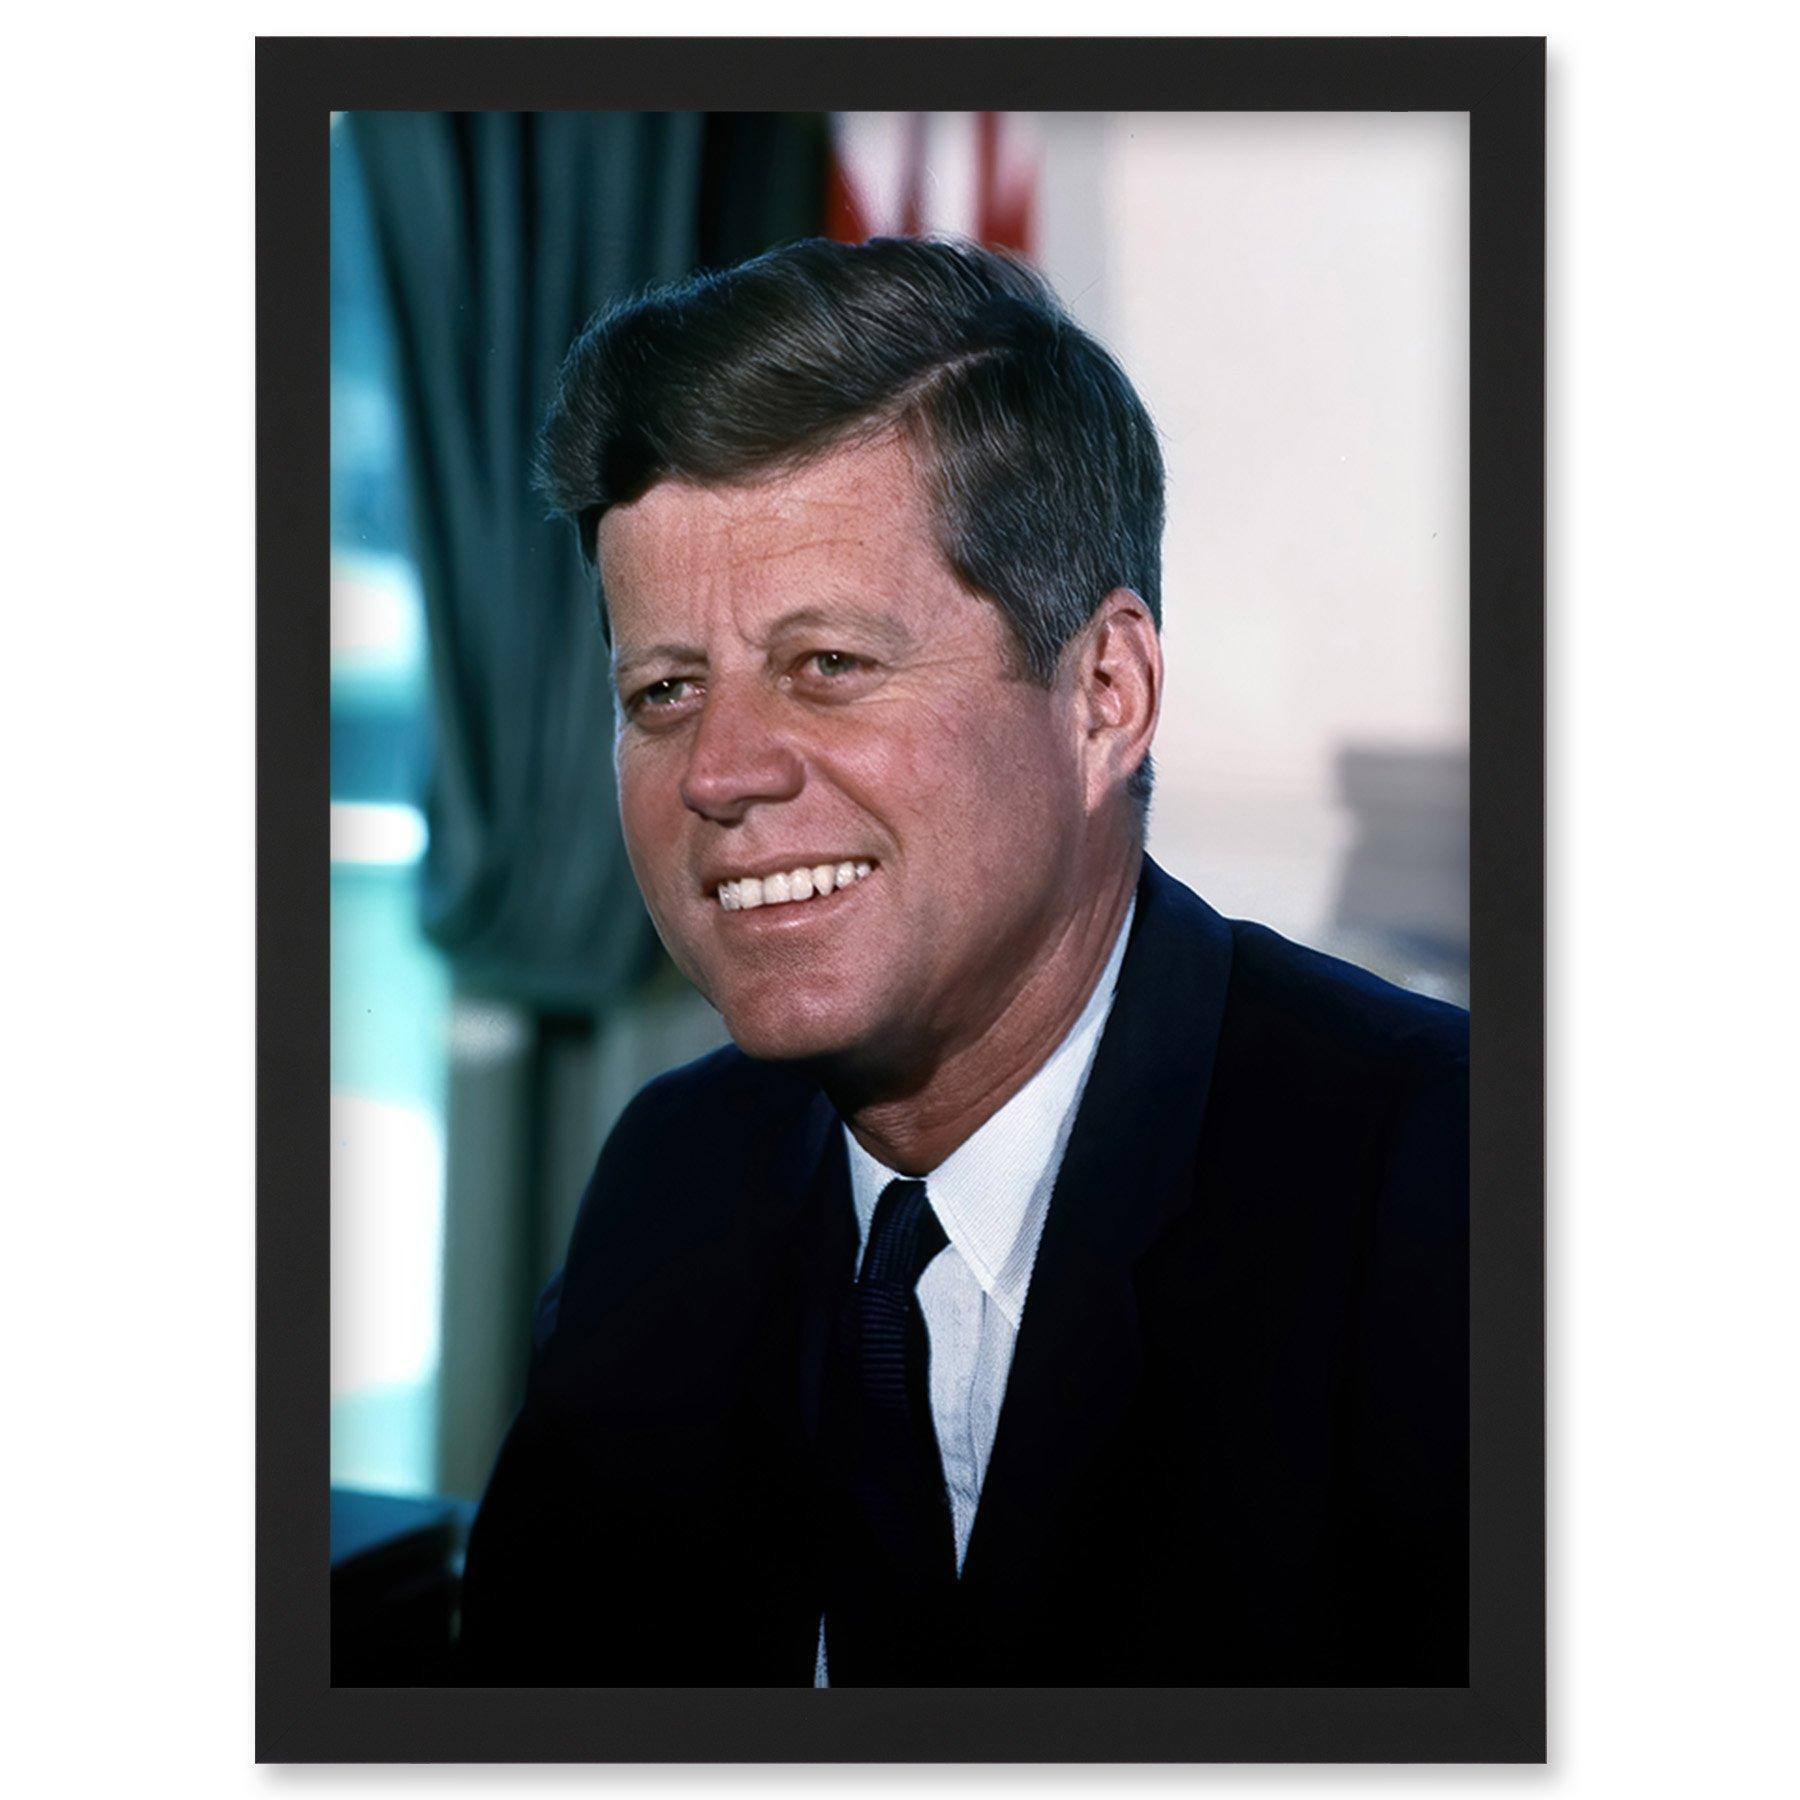 US President John F Kennedy Portrait Photo Artwork Framed Wall Art Print A4 - image 1